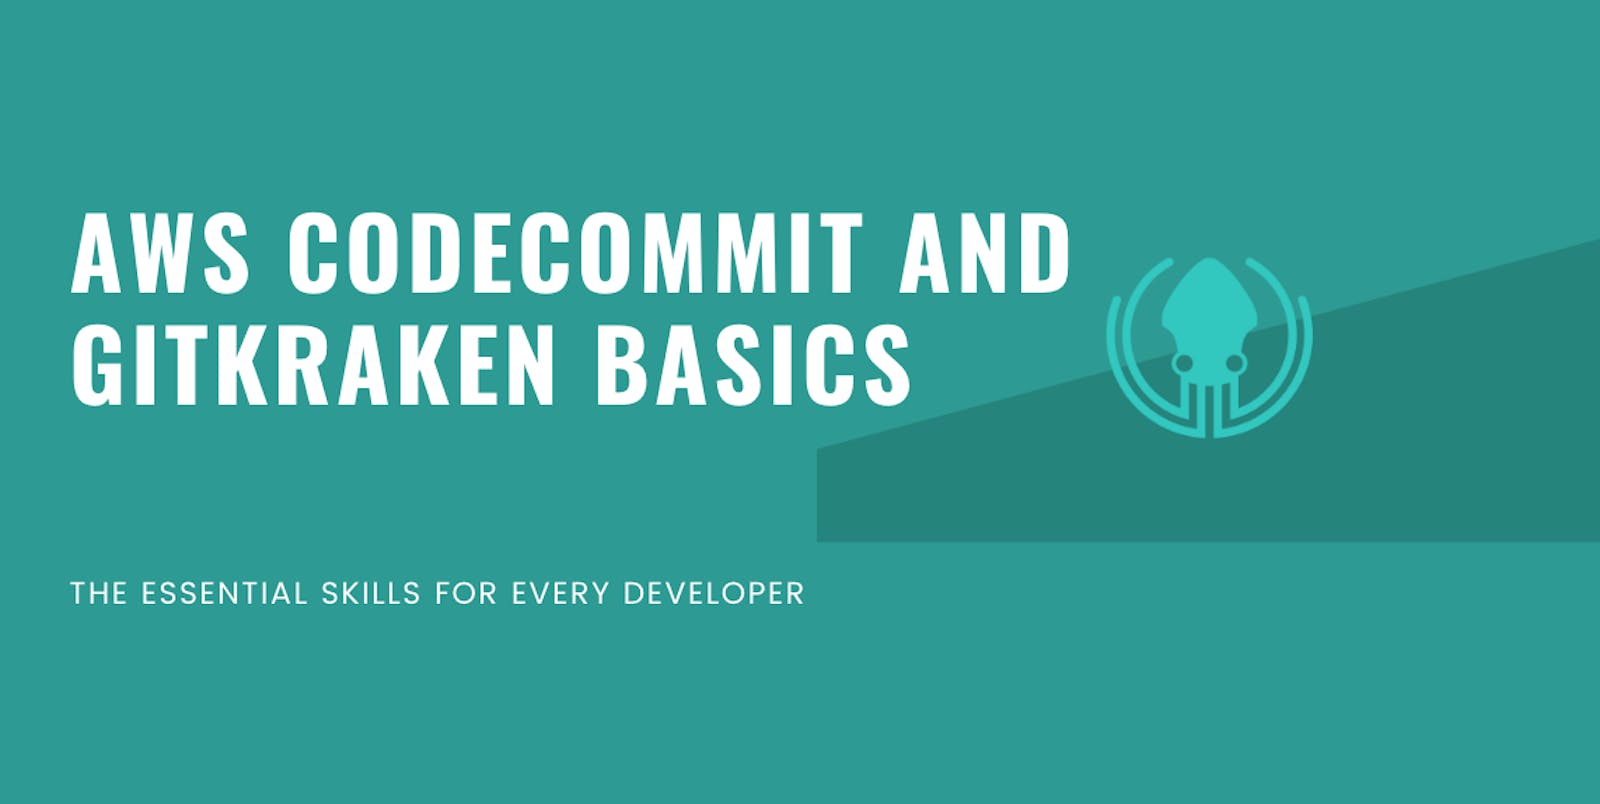 AWS CodeCommit and GitKraken Basics: The Essential Skills for Every Developer